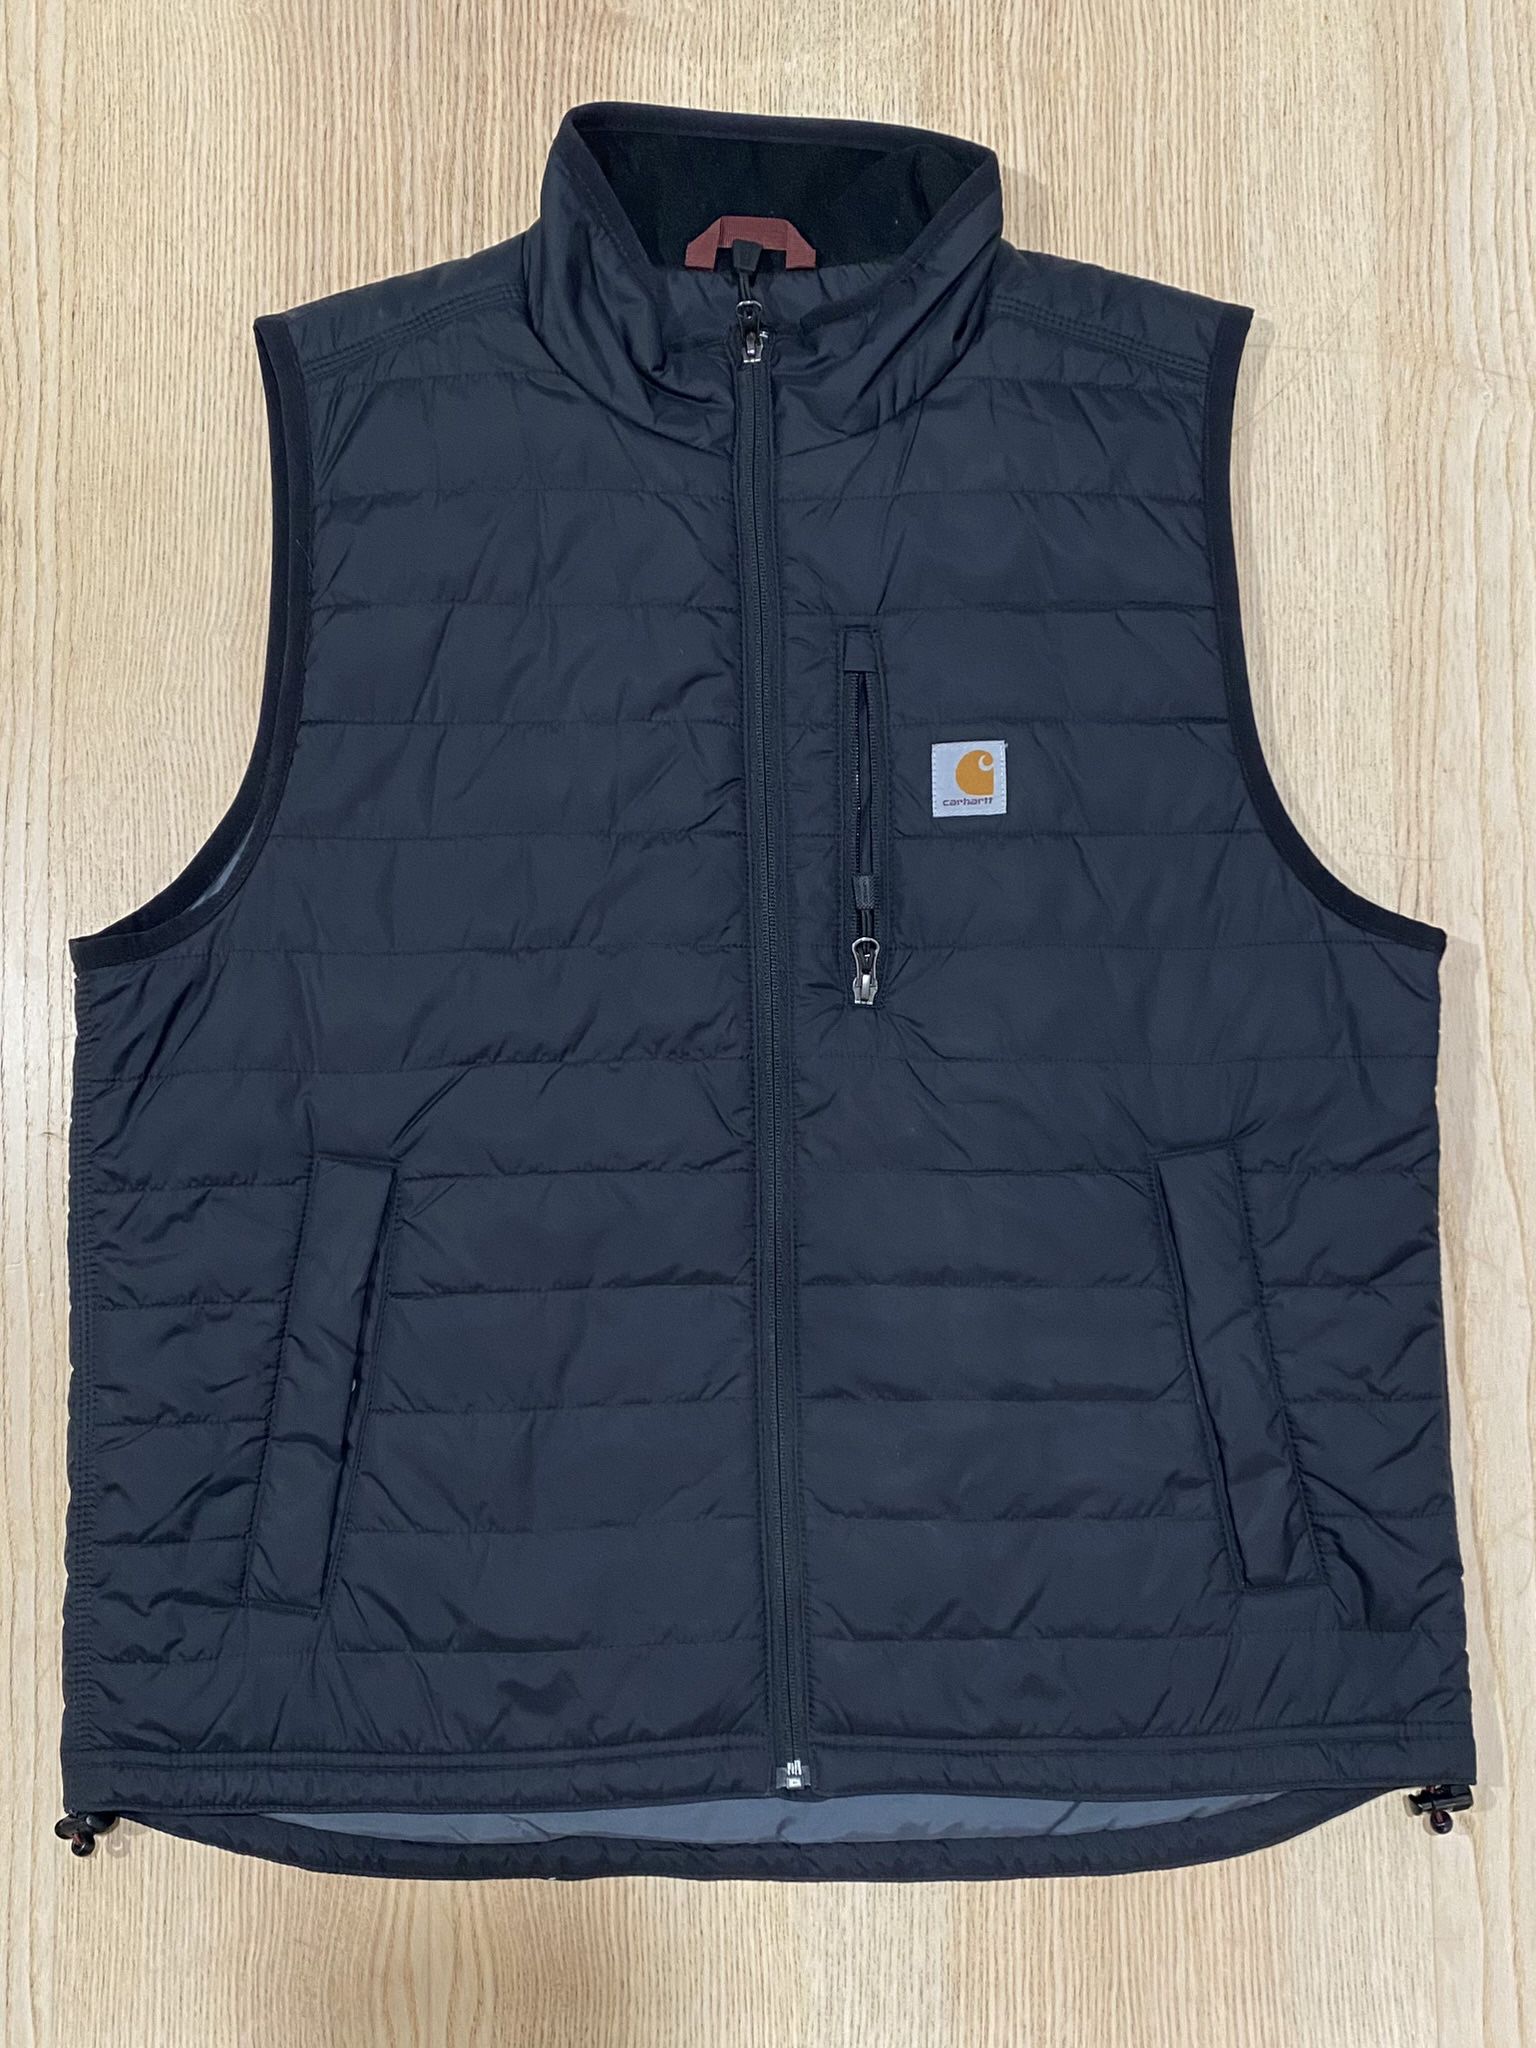 💥 CARHARTT Black Vest Large - Lightweight Insulation - Used Once